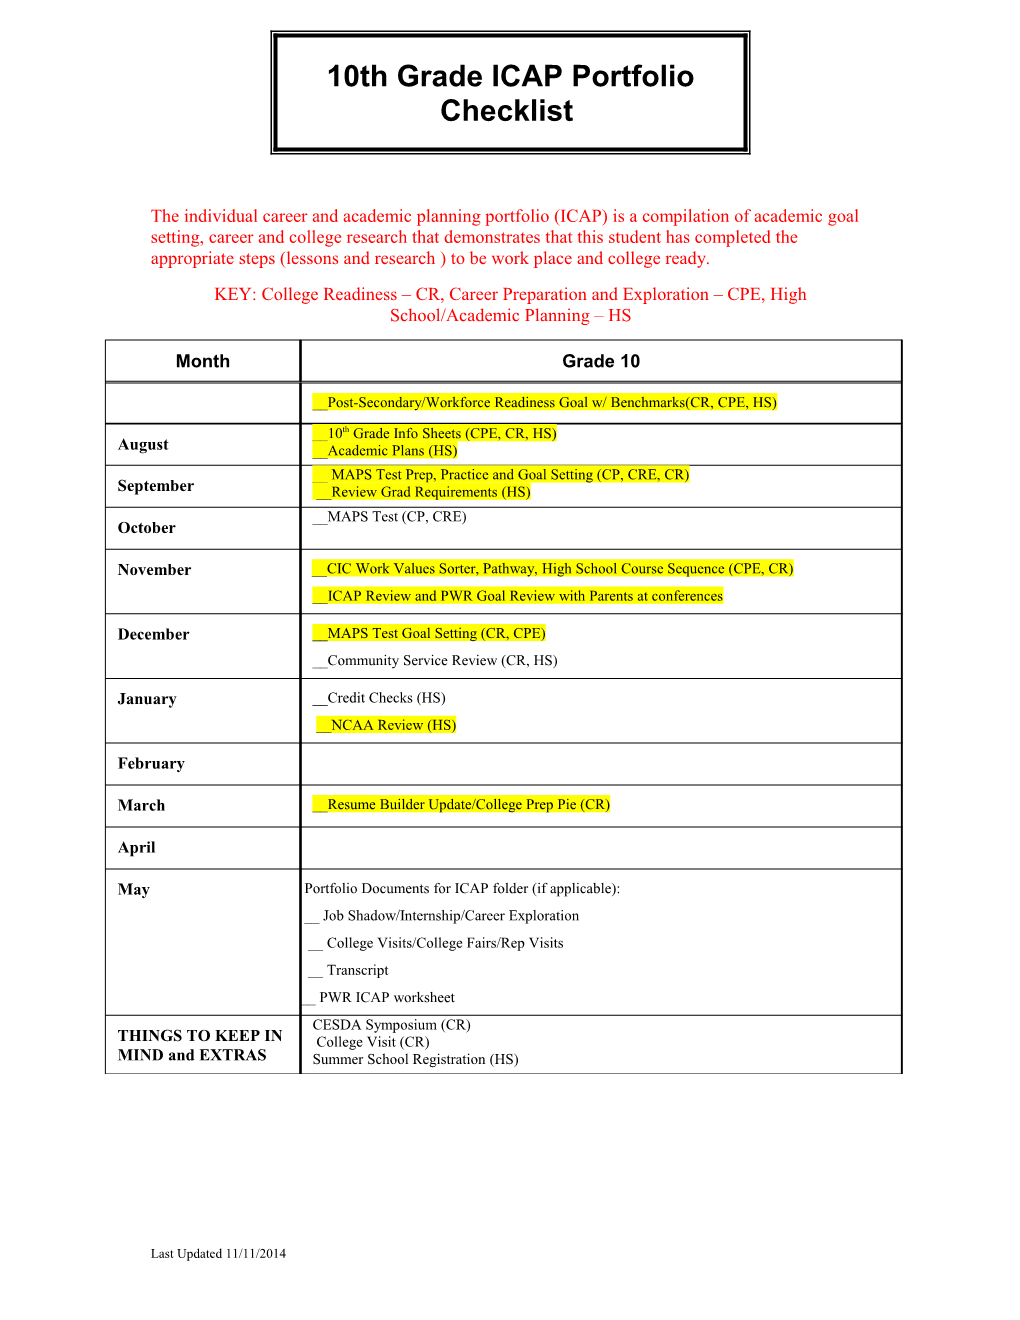 9Th Grade ICAP Portfolio Checklist Draft 10/12